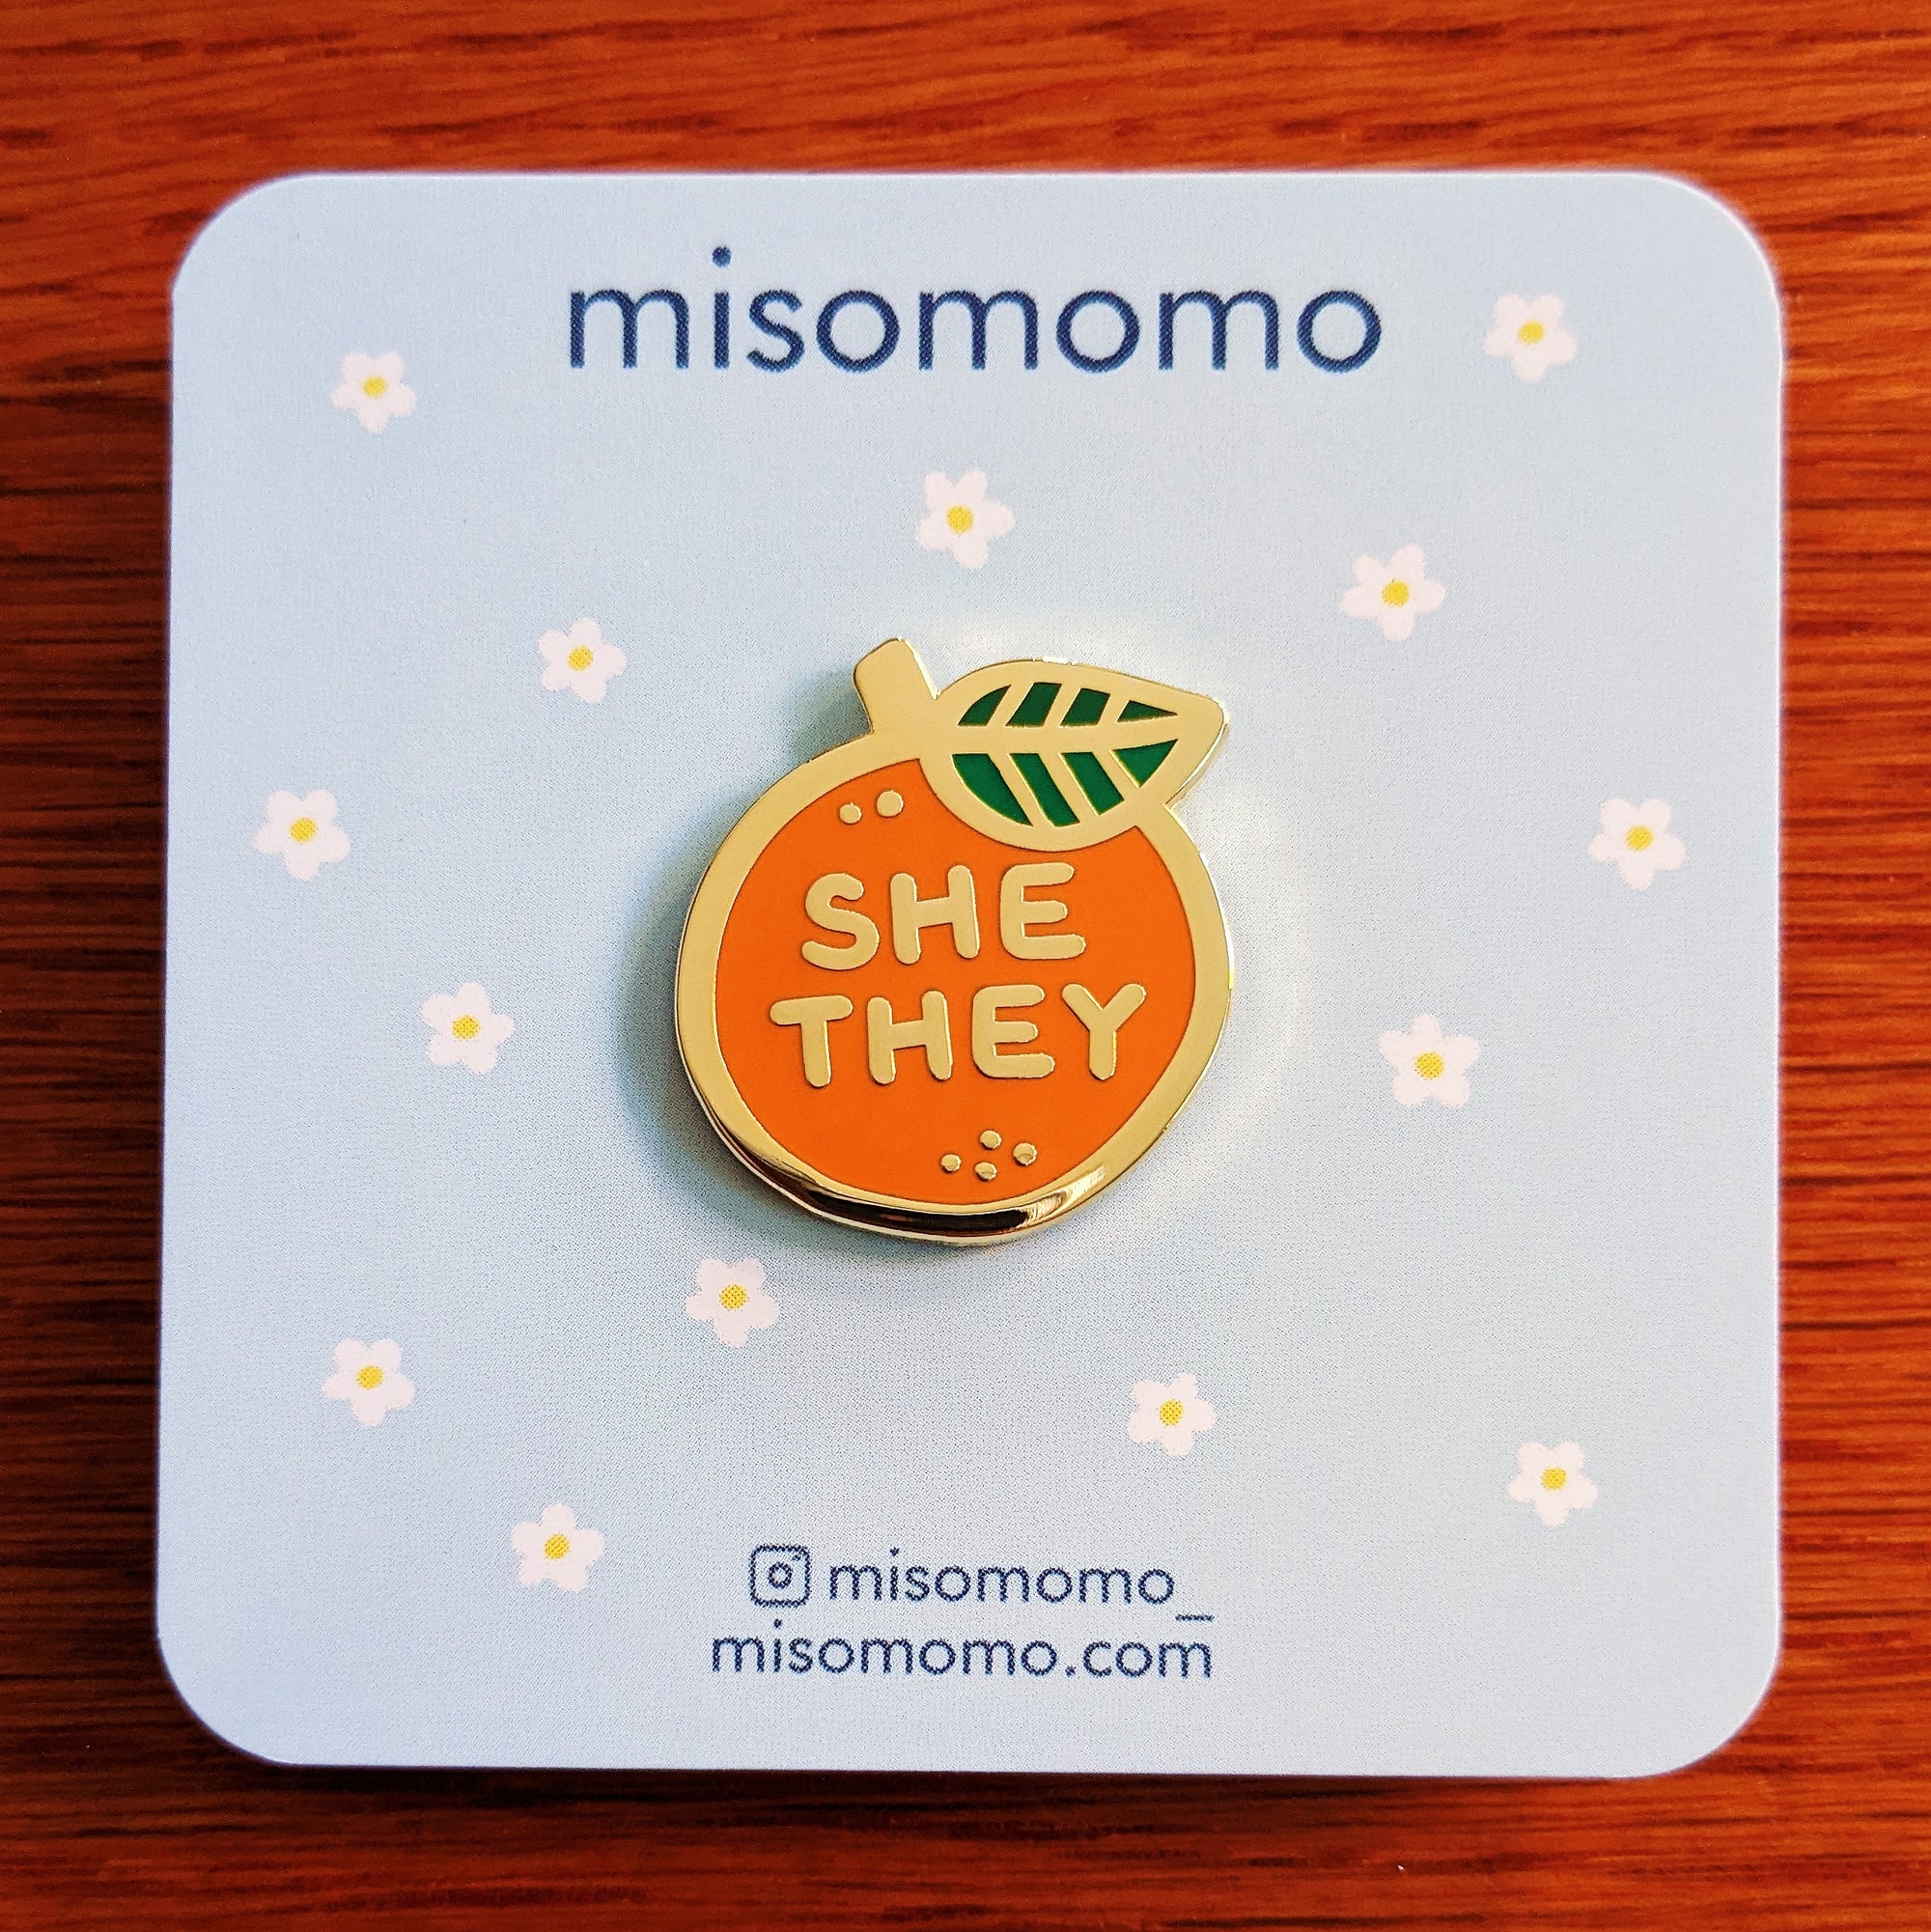 Pronoun Orange Pin - she/they